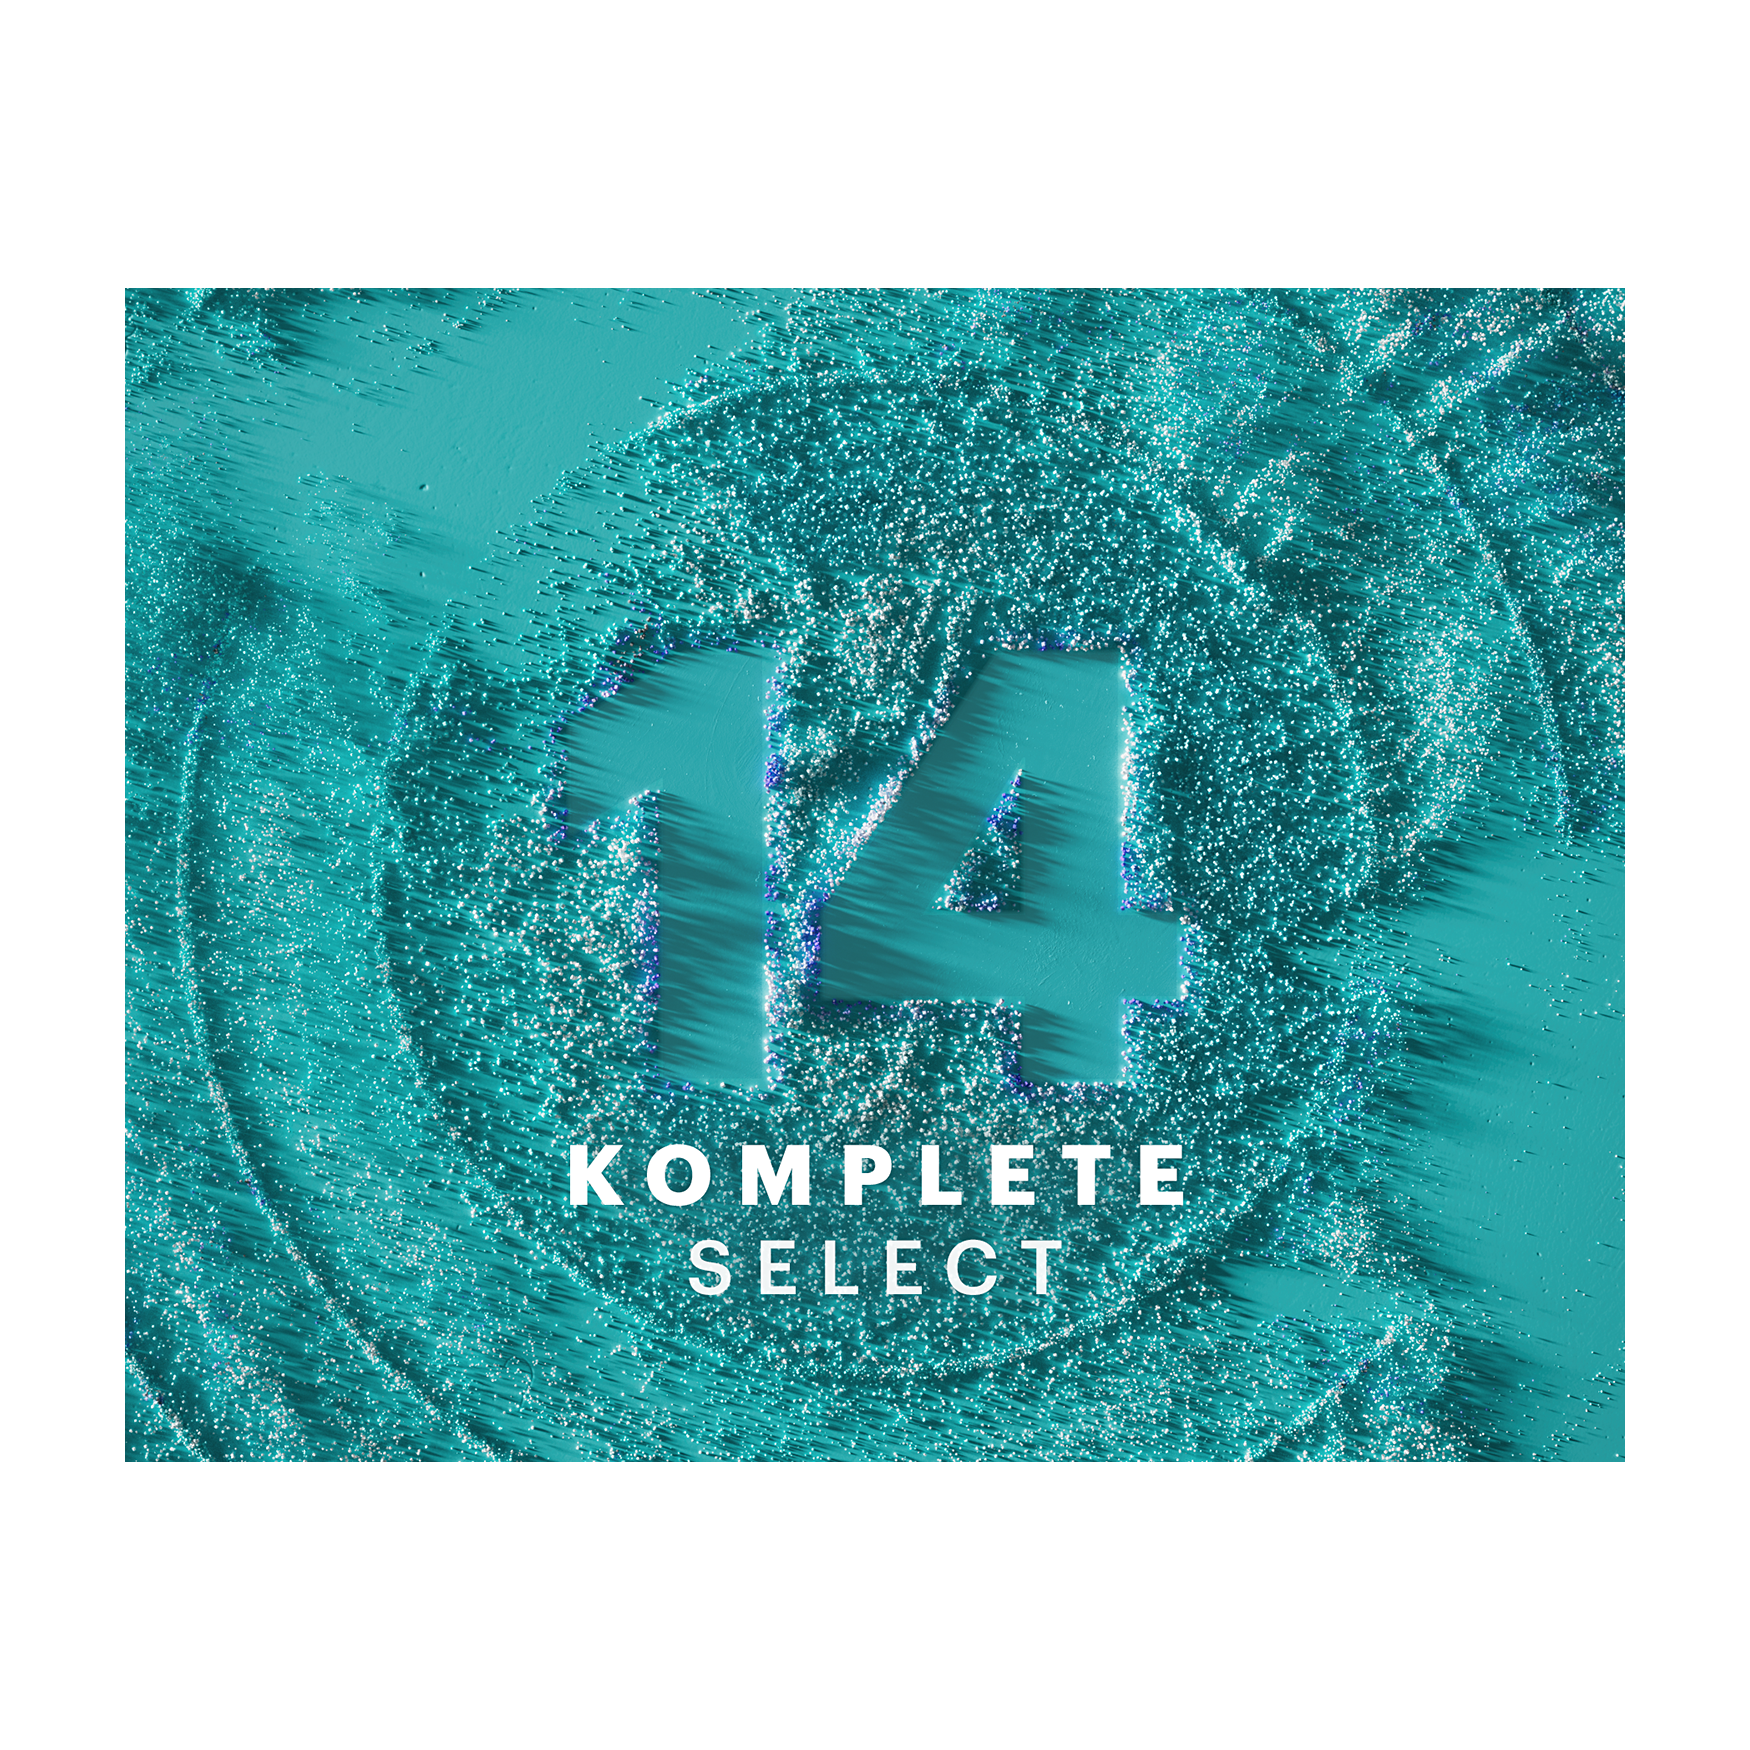 Komplete-14-Select-artwork-logo